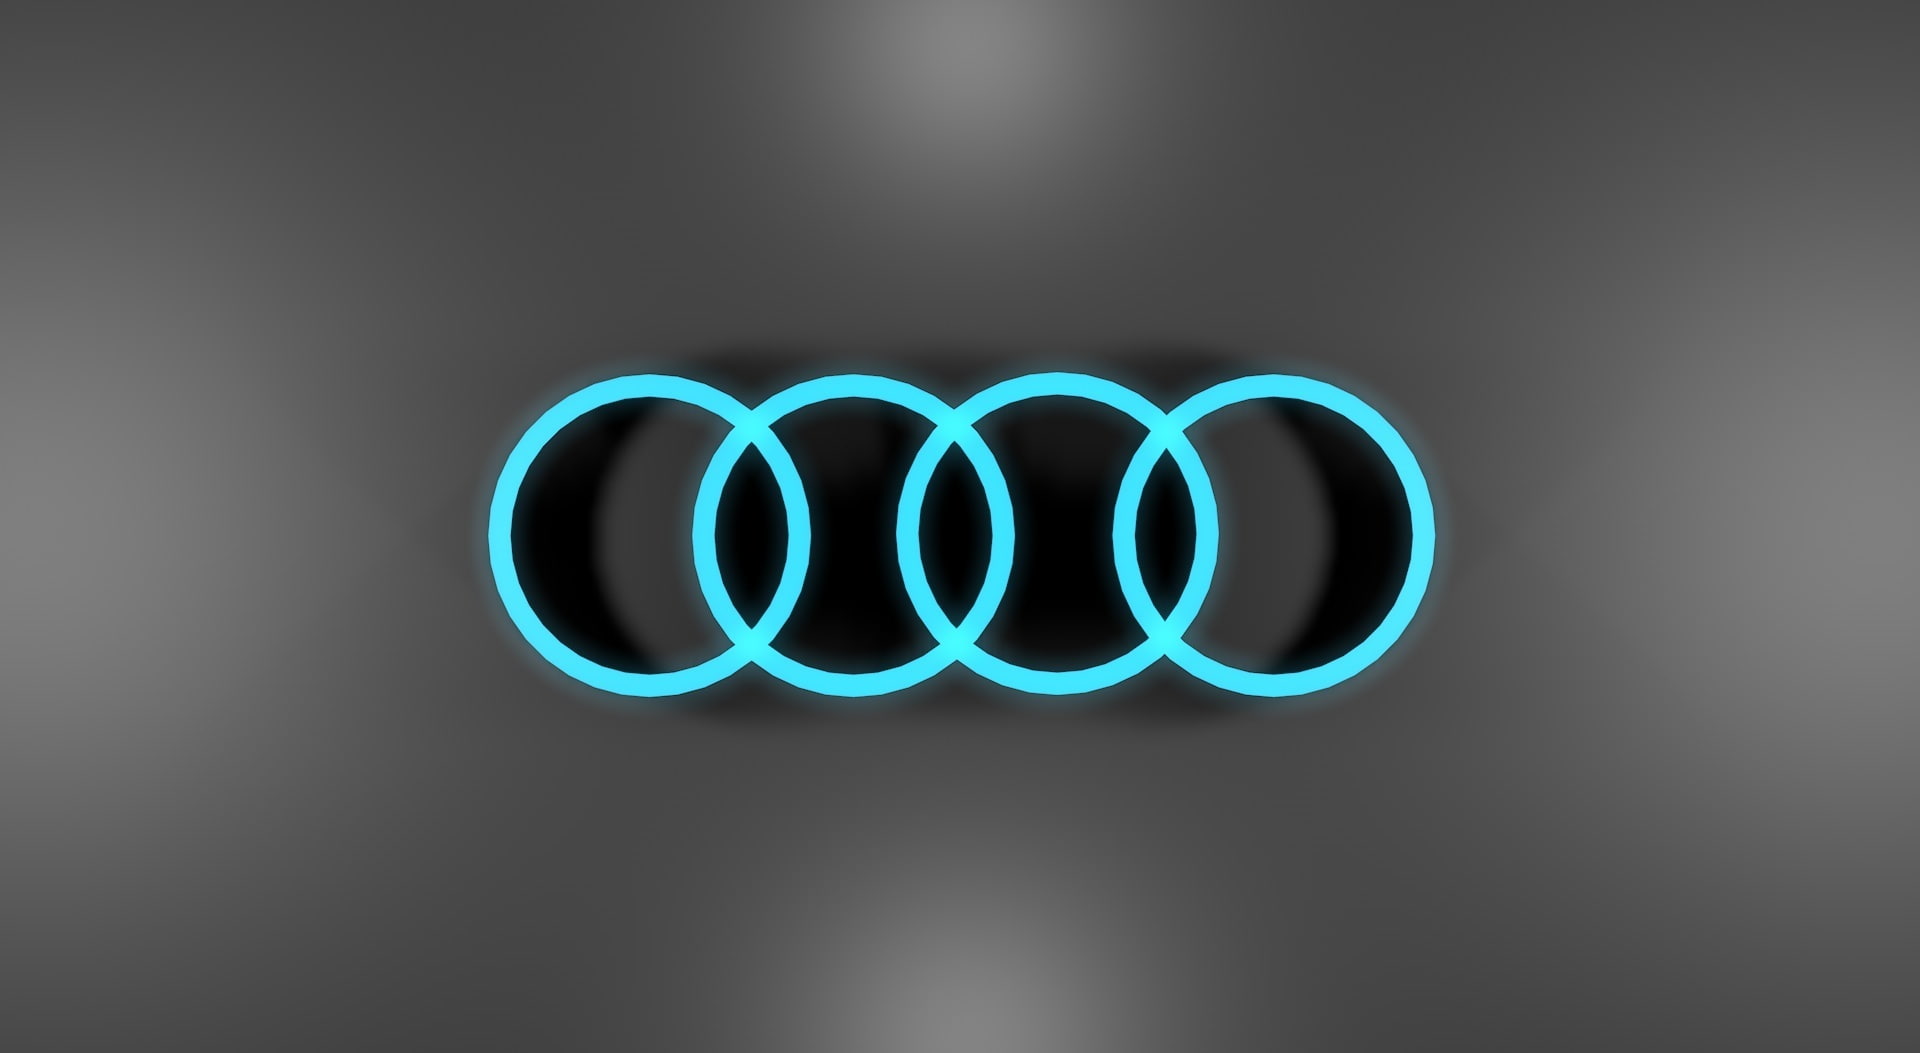 Audi HD, Audi logo, Cars, studio shot, illuminated, blue, glowing